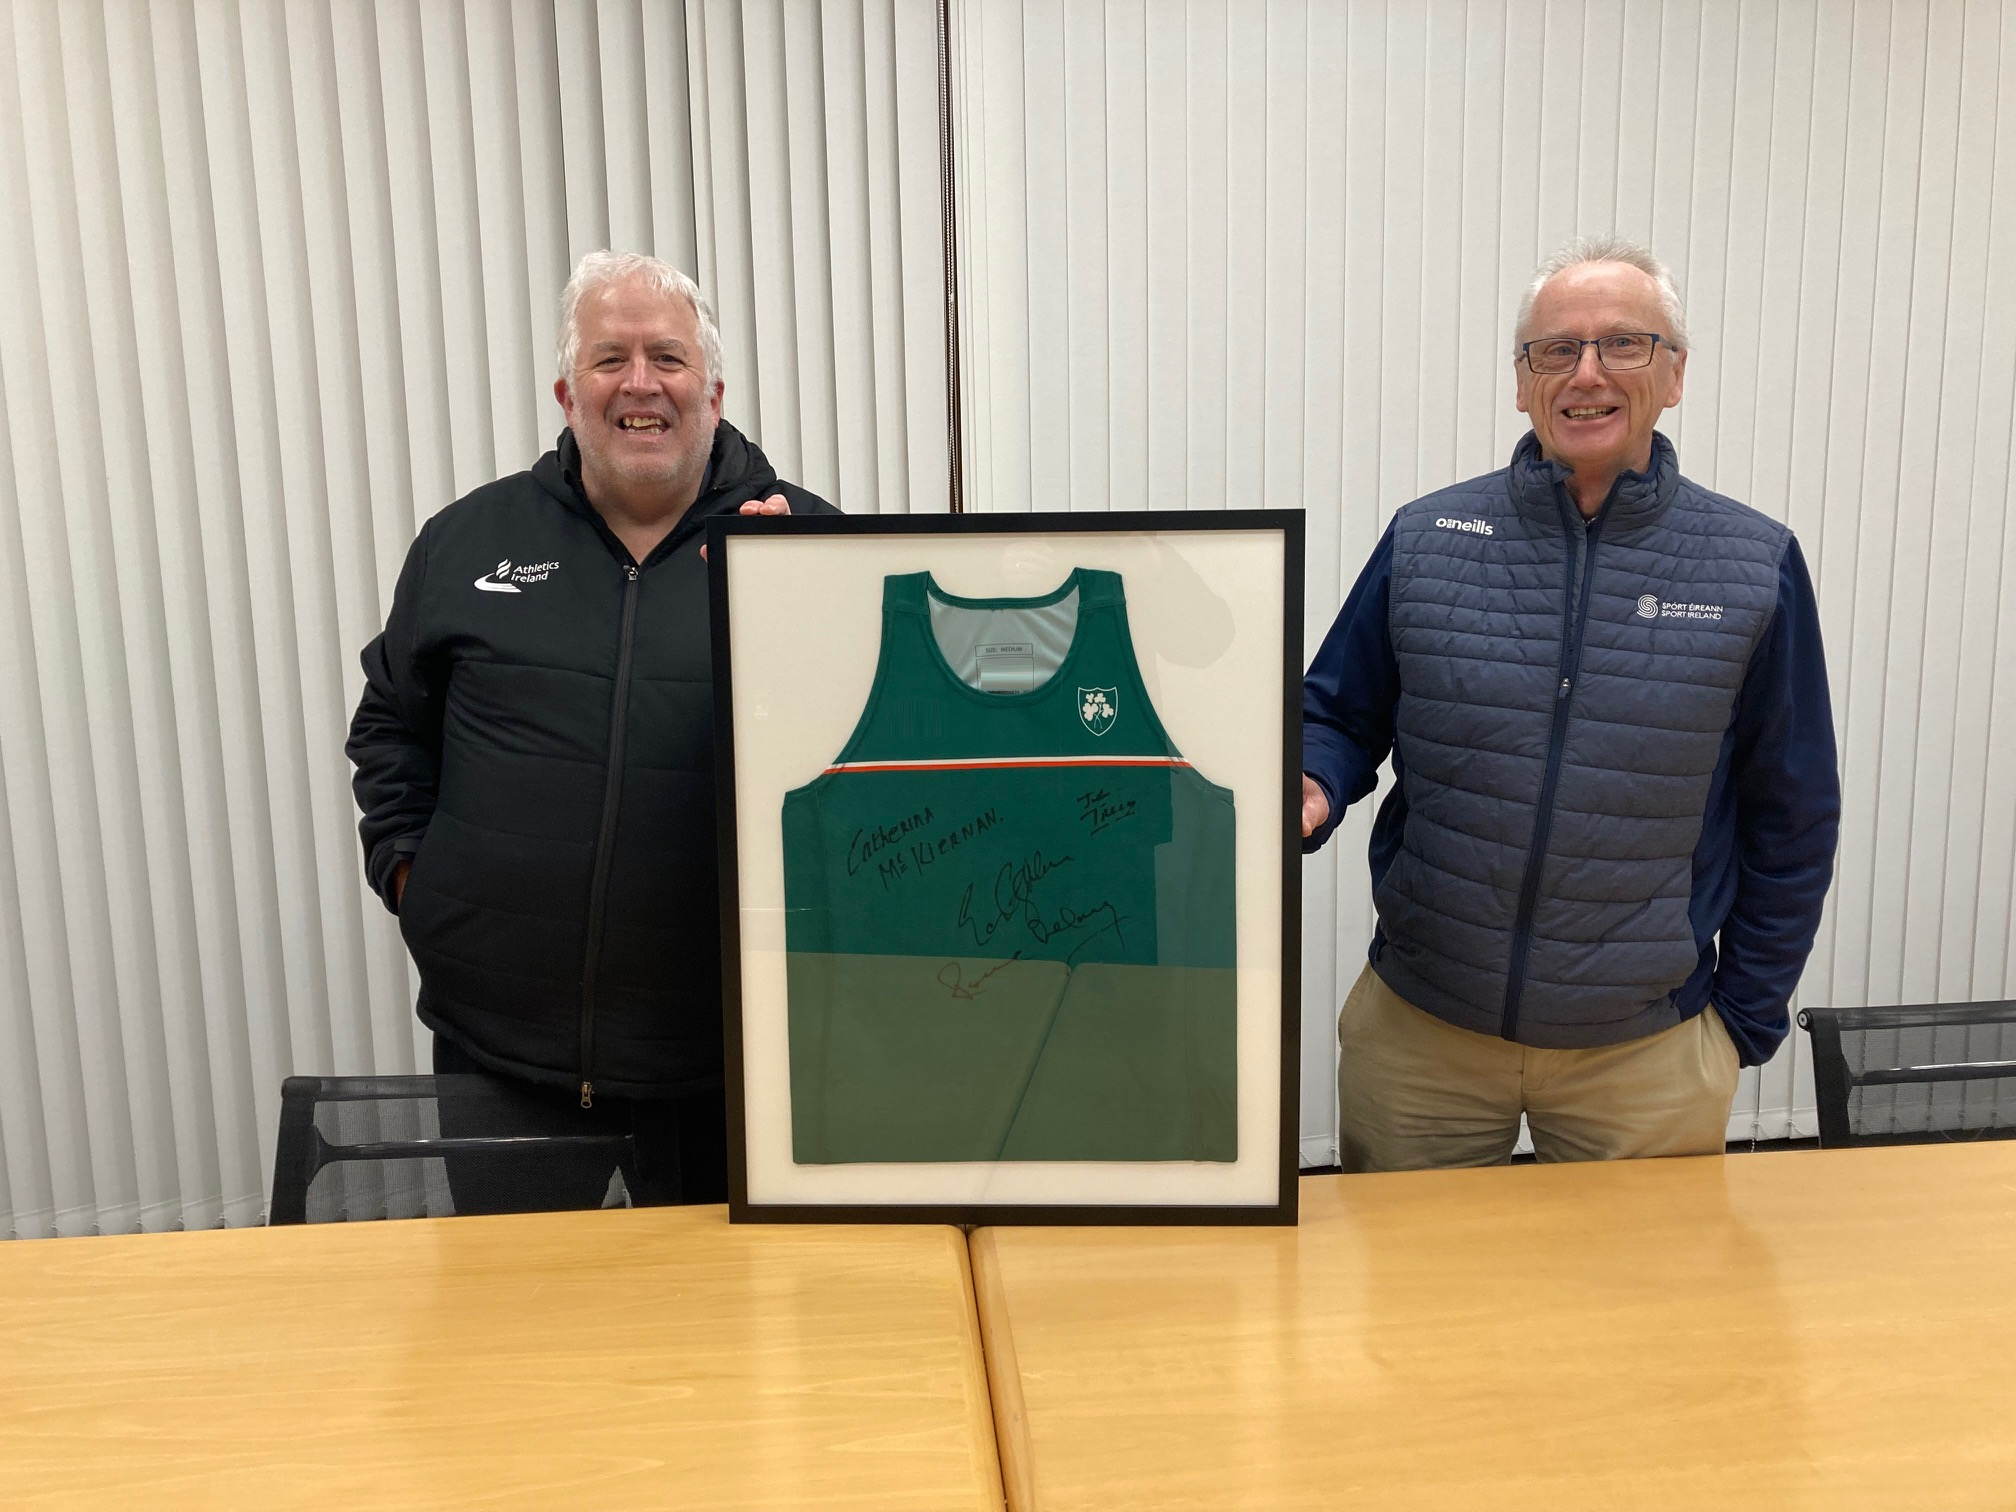 Athletics Ireland recognise huge contribution of John Treacy to Irish sport